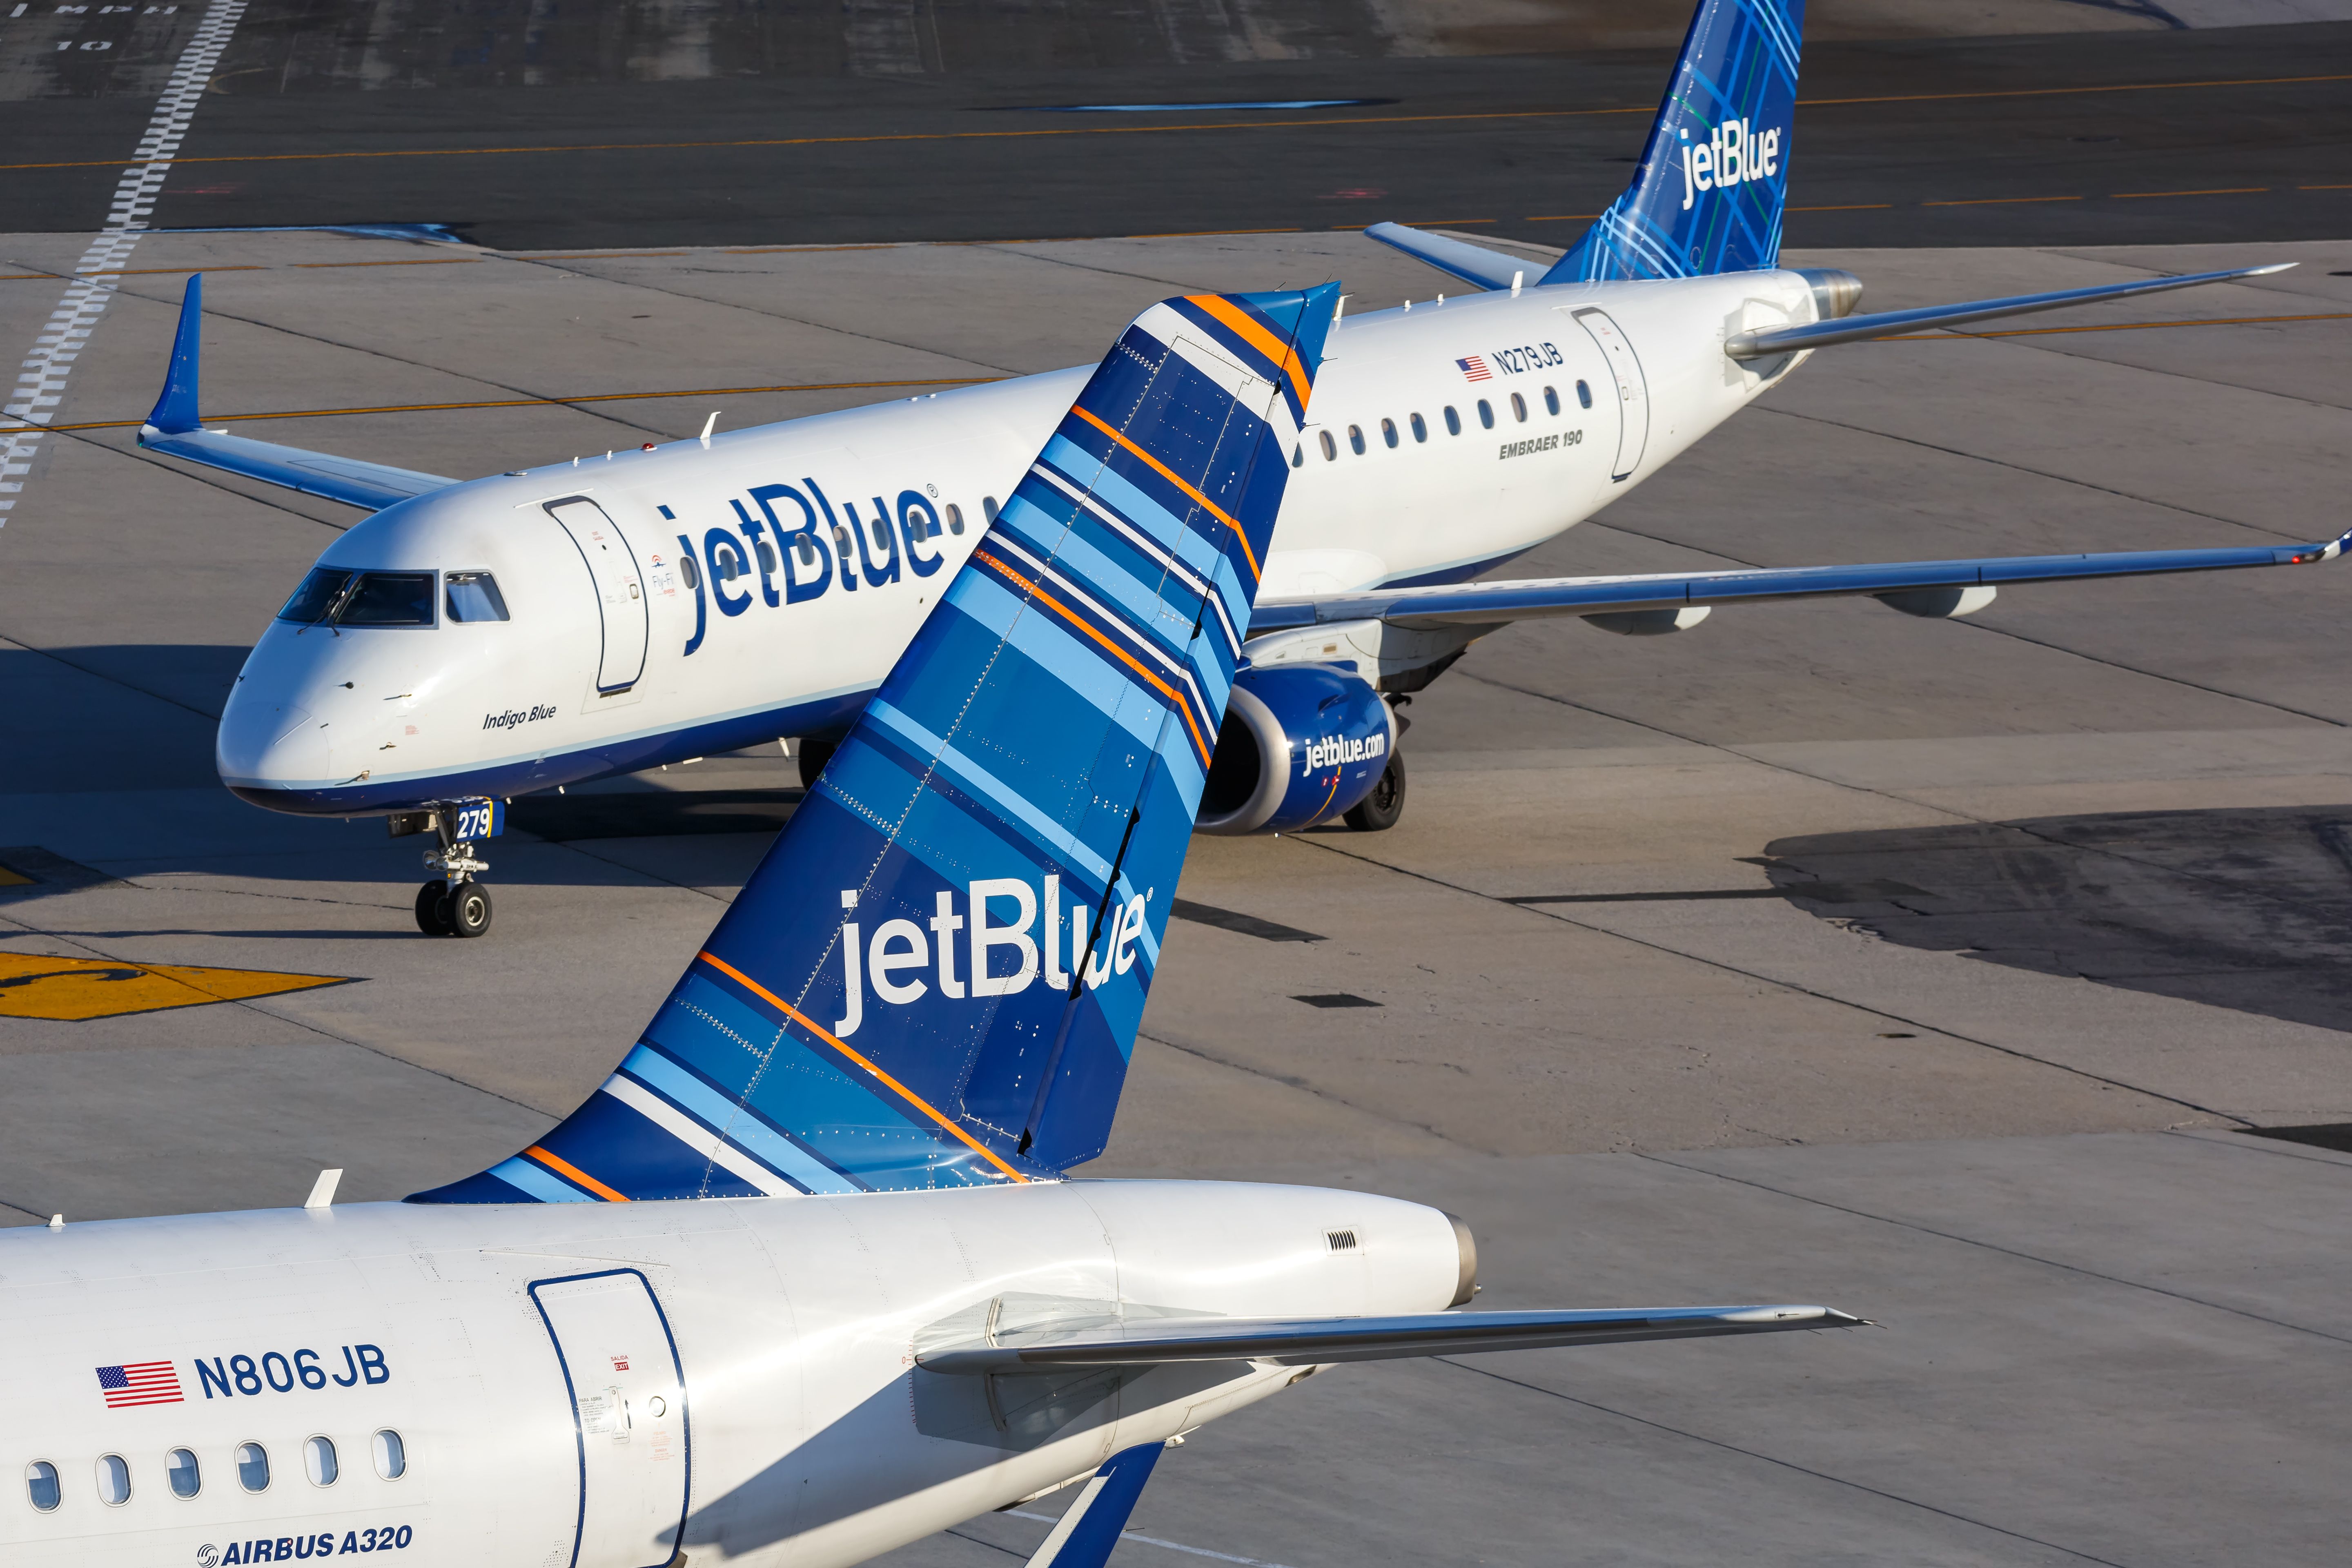 JetBlue Embraer 190 airplane at New York JFK airport (JFK) in New York.